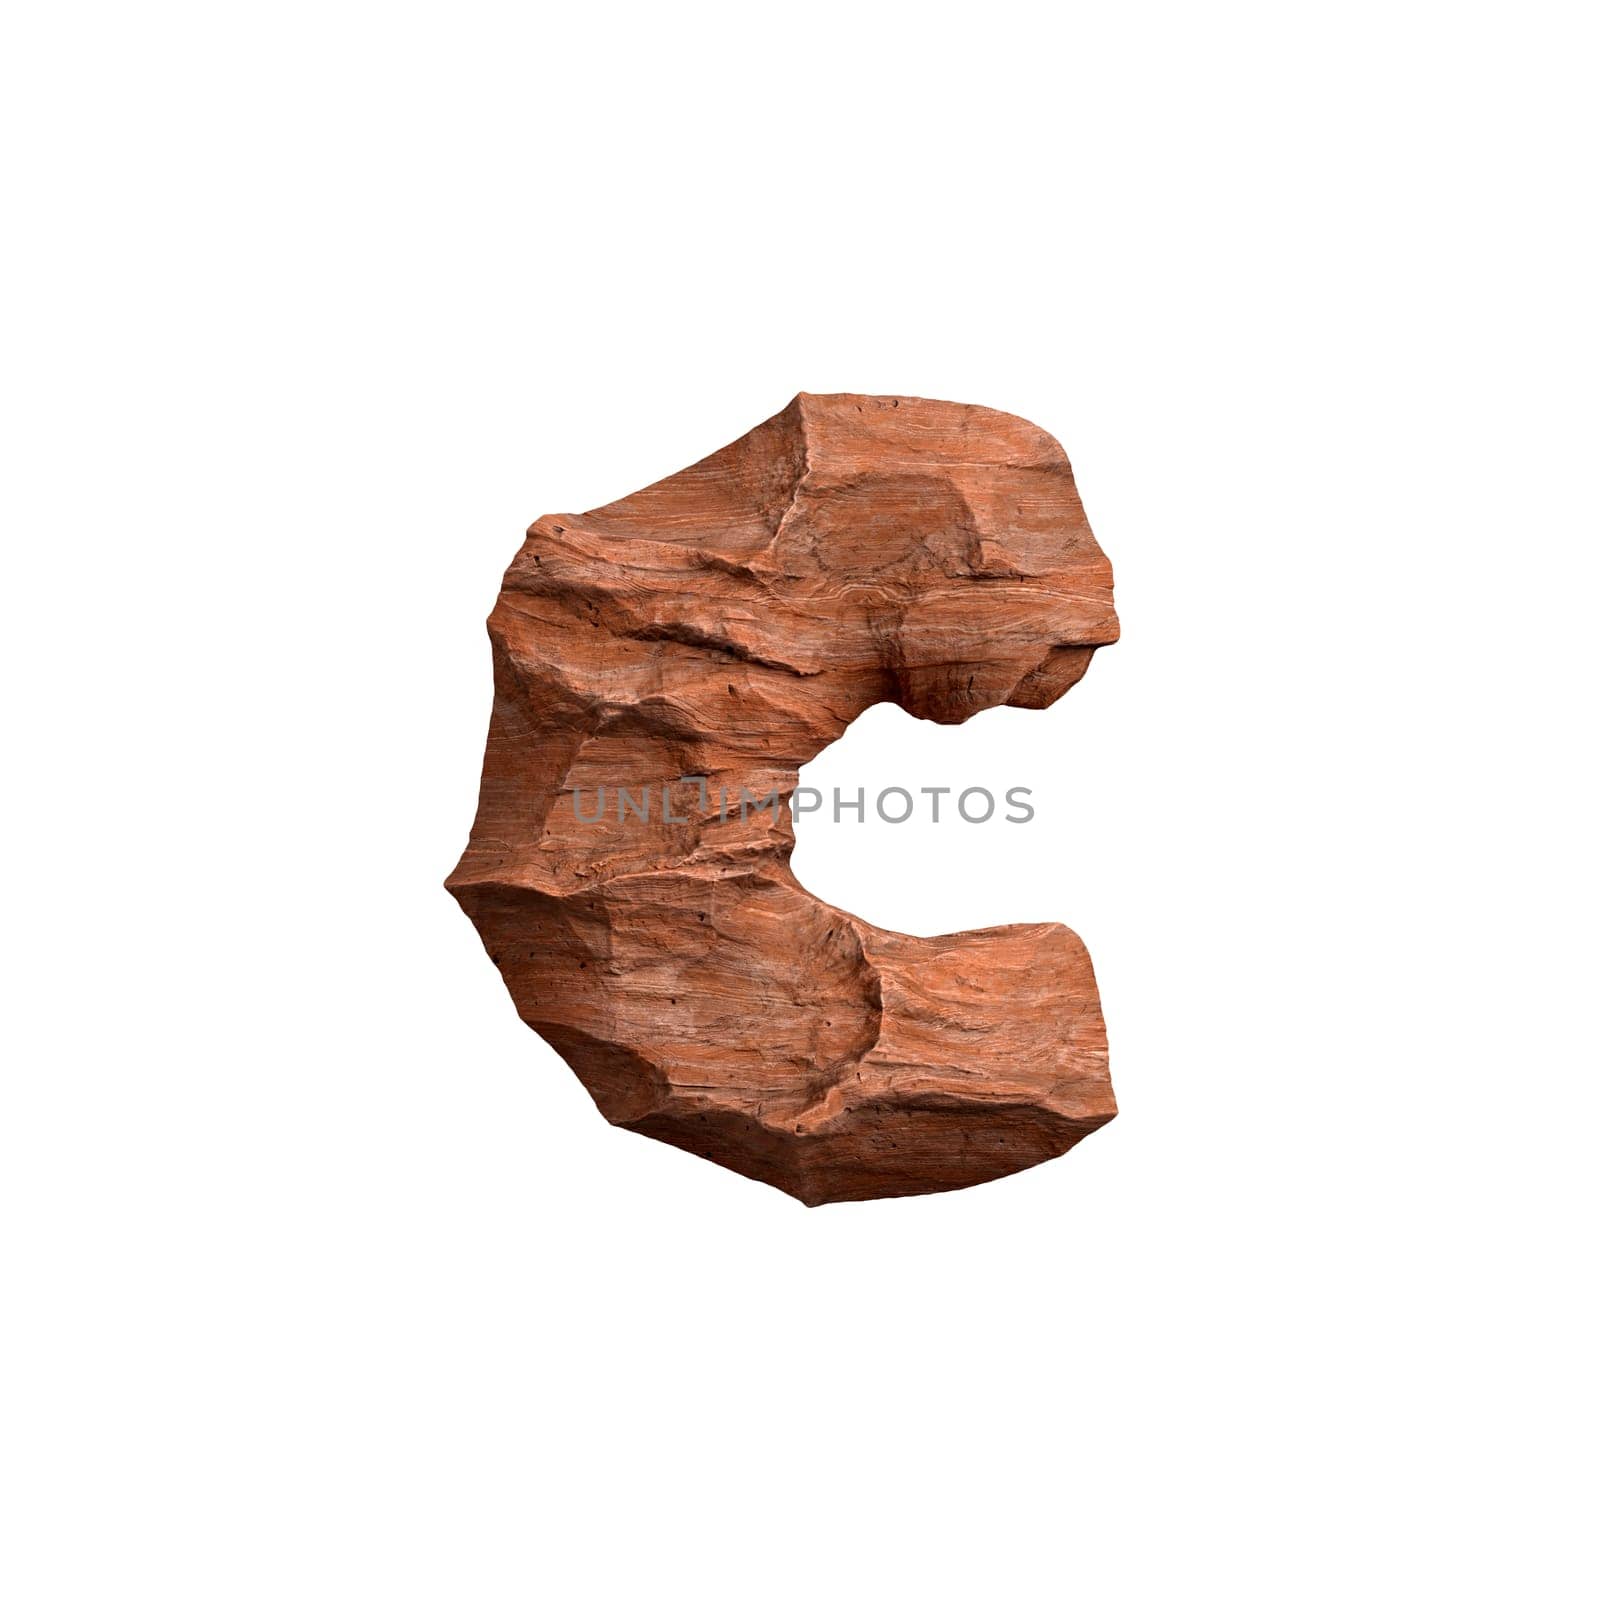 Desert sandstone letter C - Lowercase 3d red rock font - Suitable for Arizona, geology or desert related subjects by chrisroll